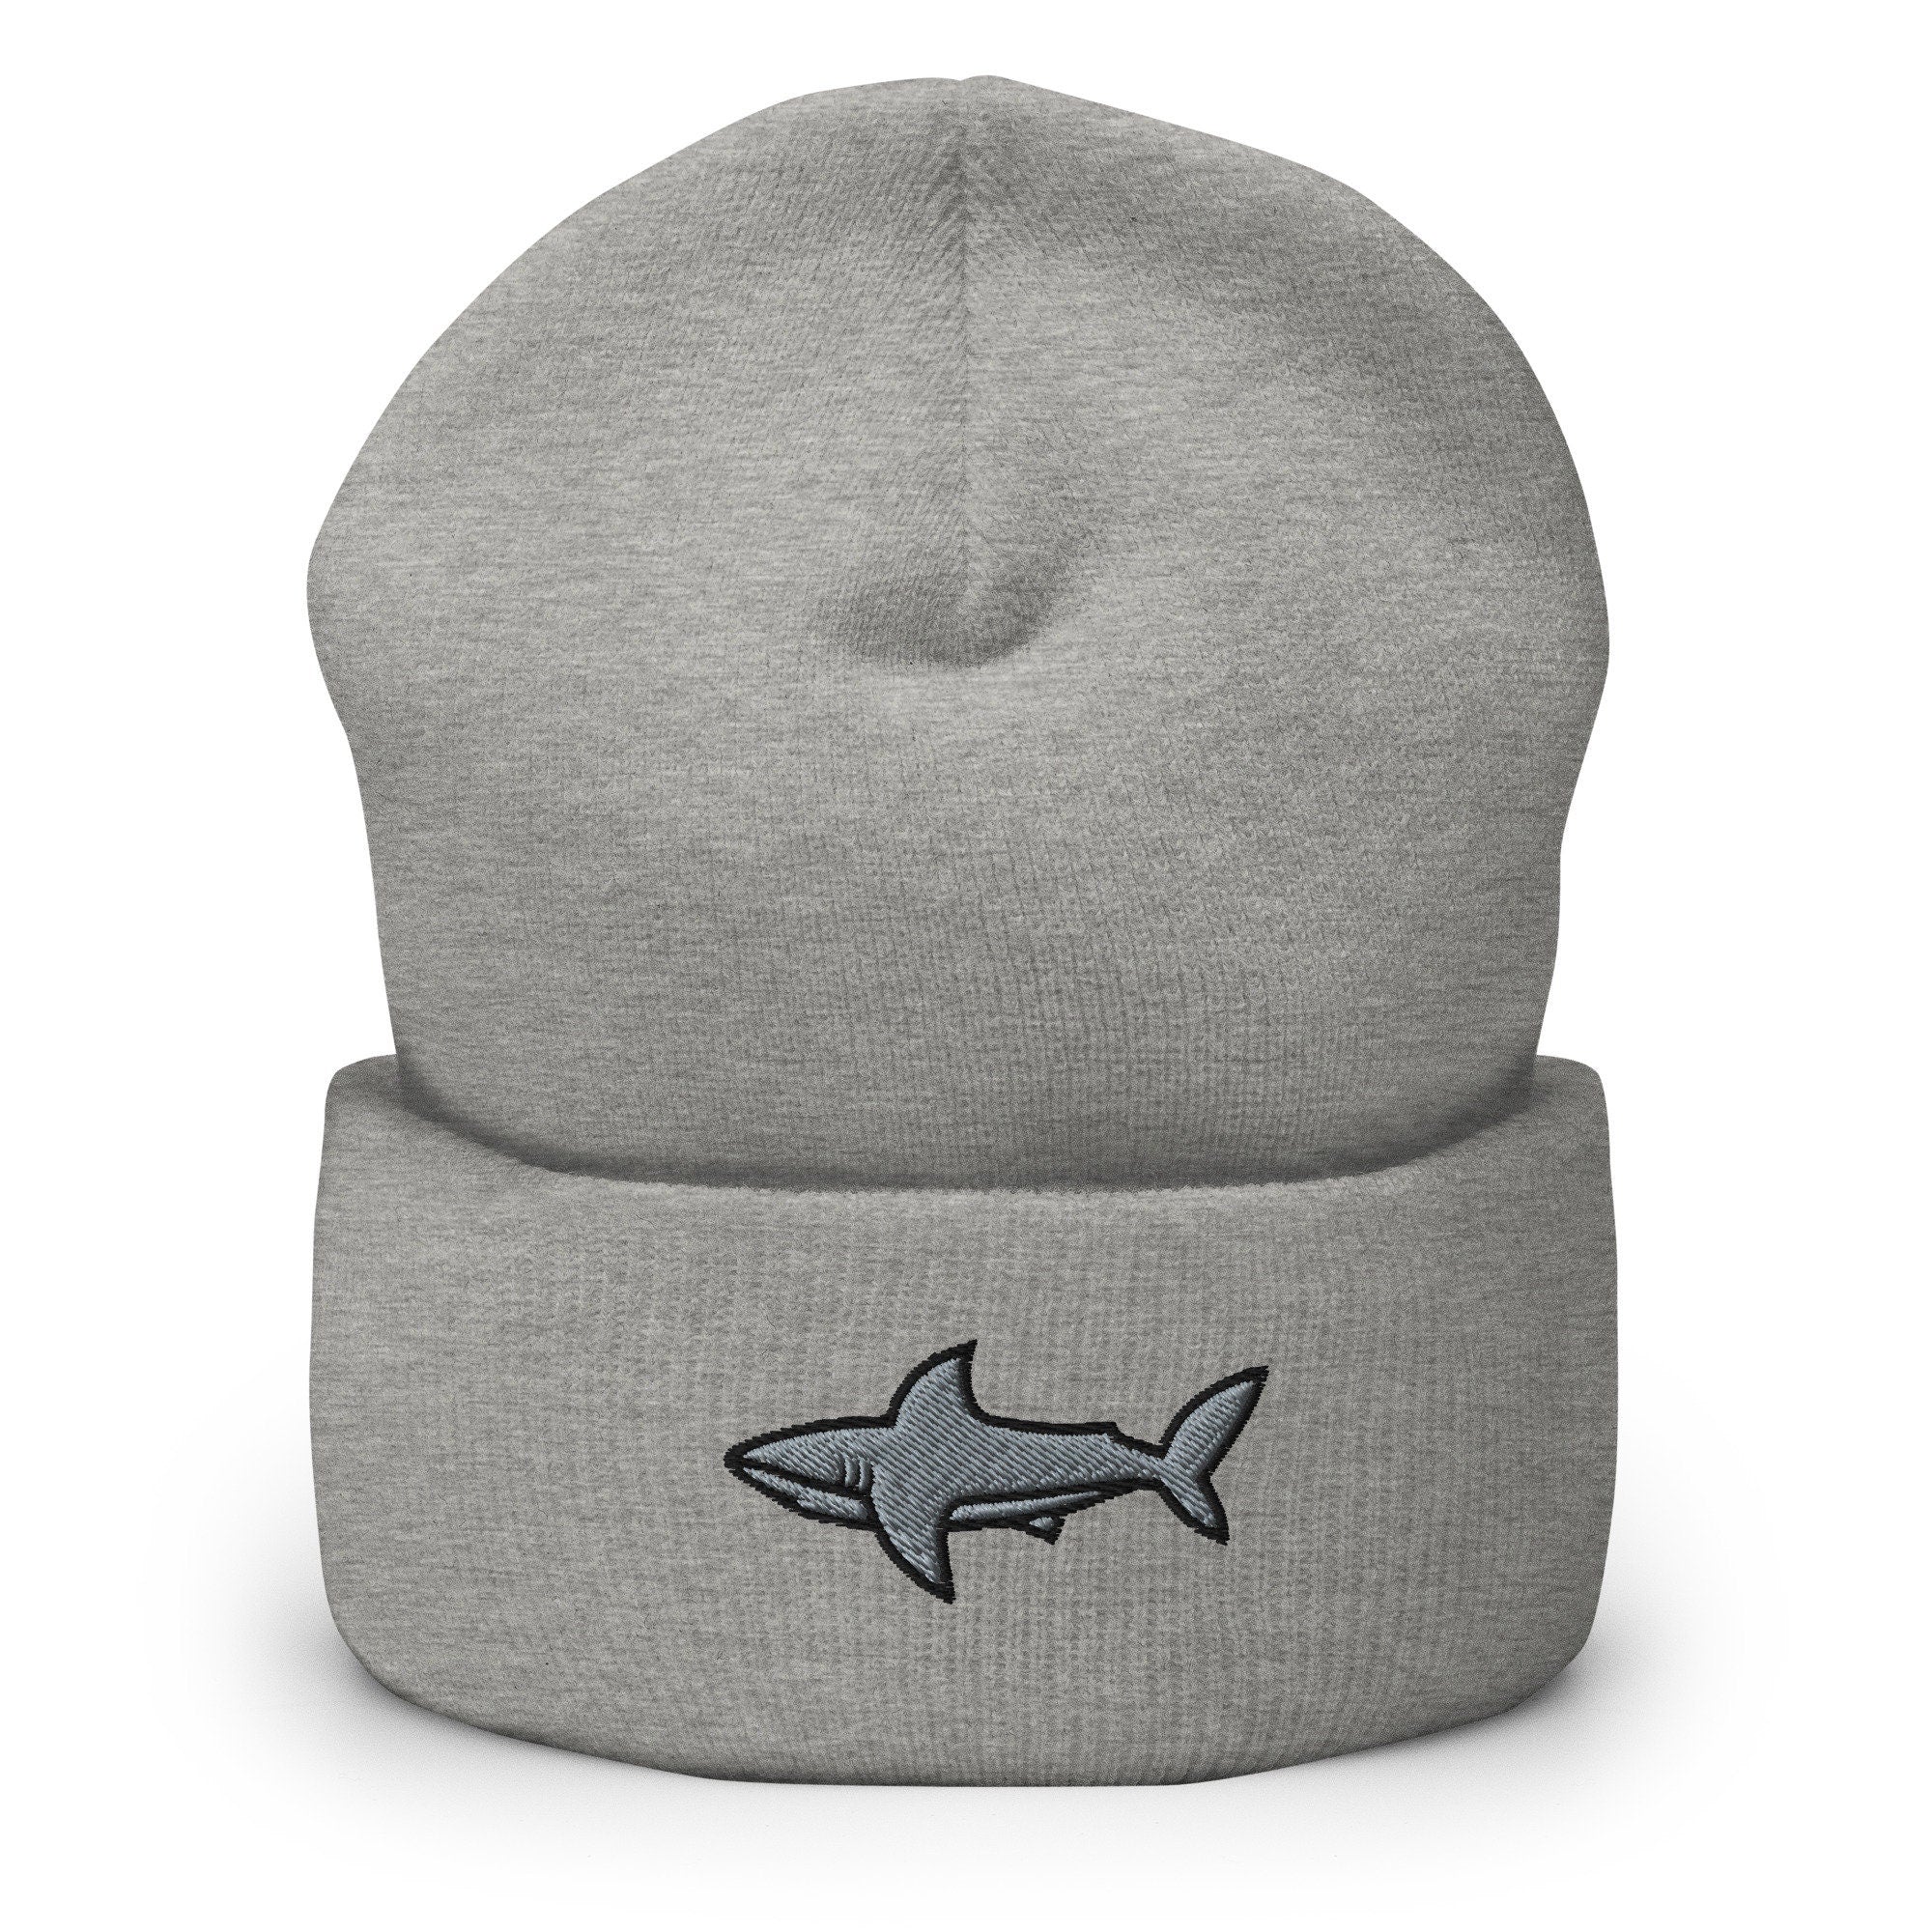 Shark Lover, Shark Week, Great White Shark Embroidered Beanie, Handmade Cuffed Knit Unisex Slouchy Adult Winter Hat Cap Gift